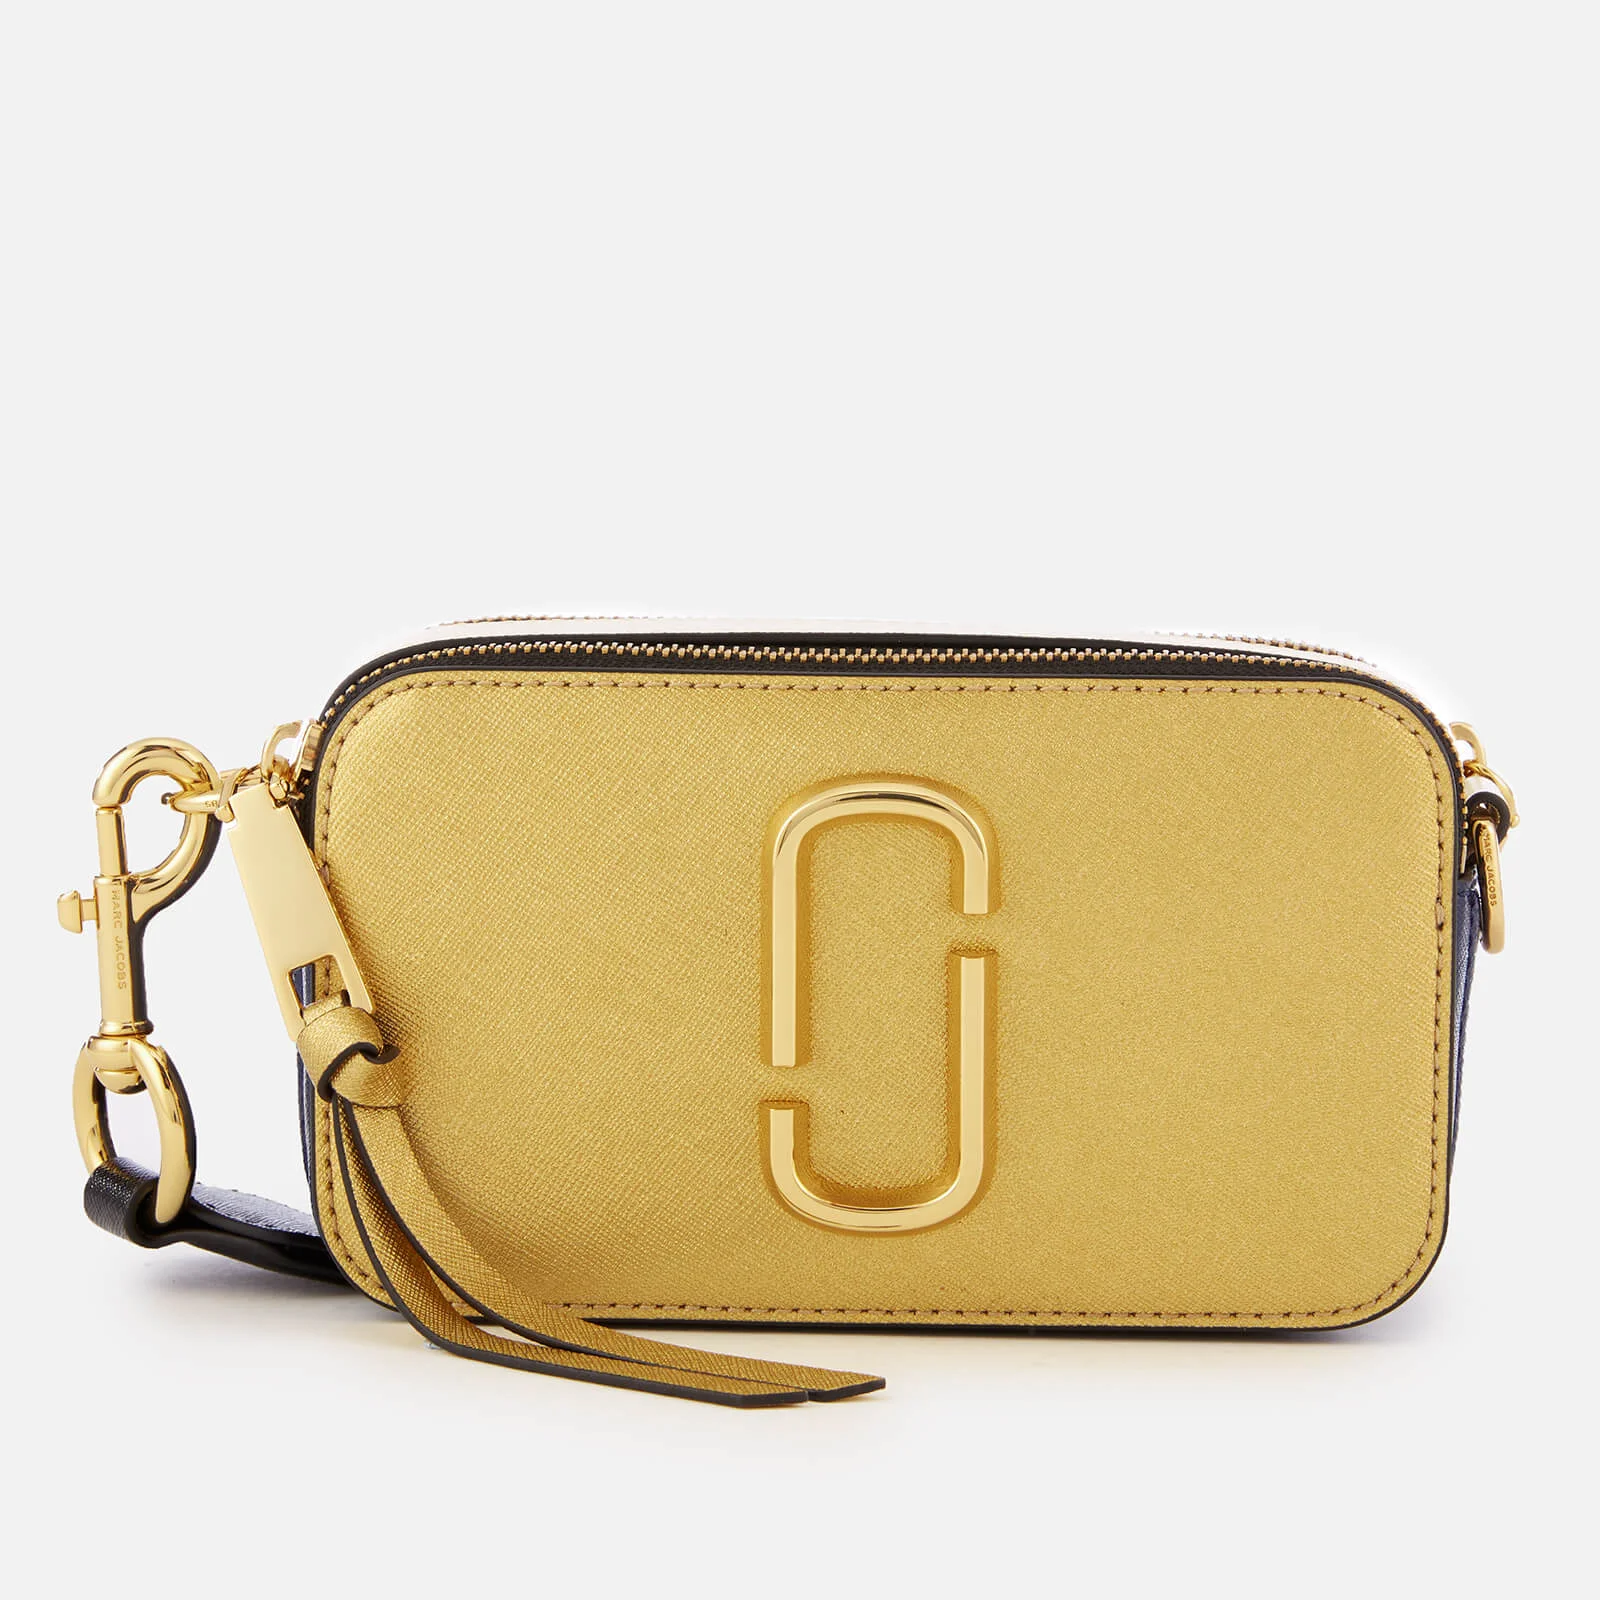 Marc Jacobs Women's Snapshot Cross Body Bag - Gold Multi Image 1